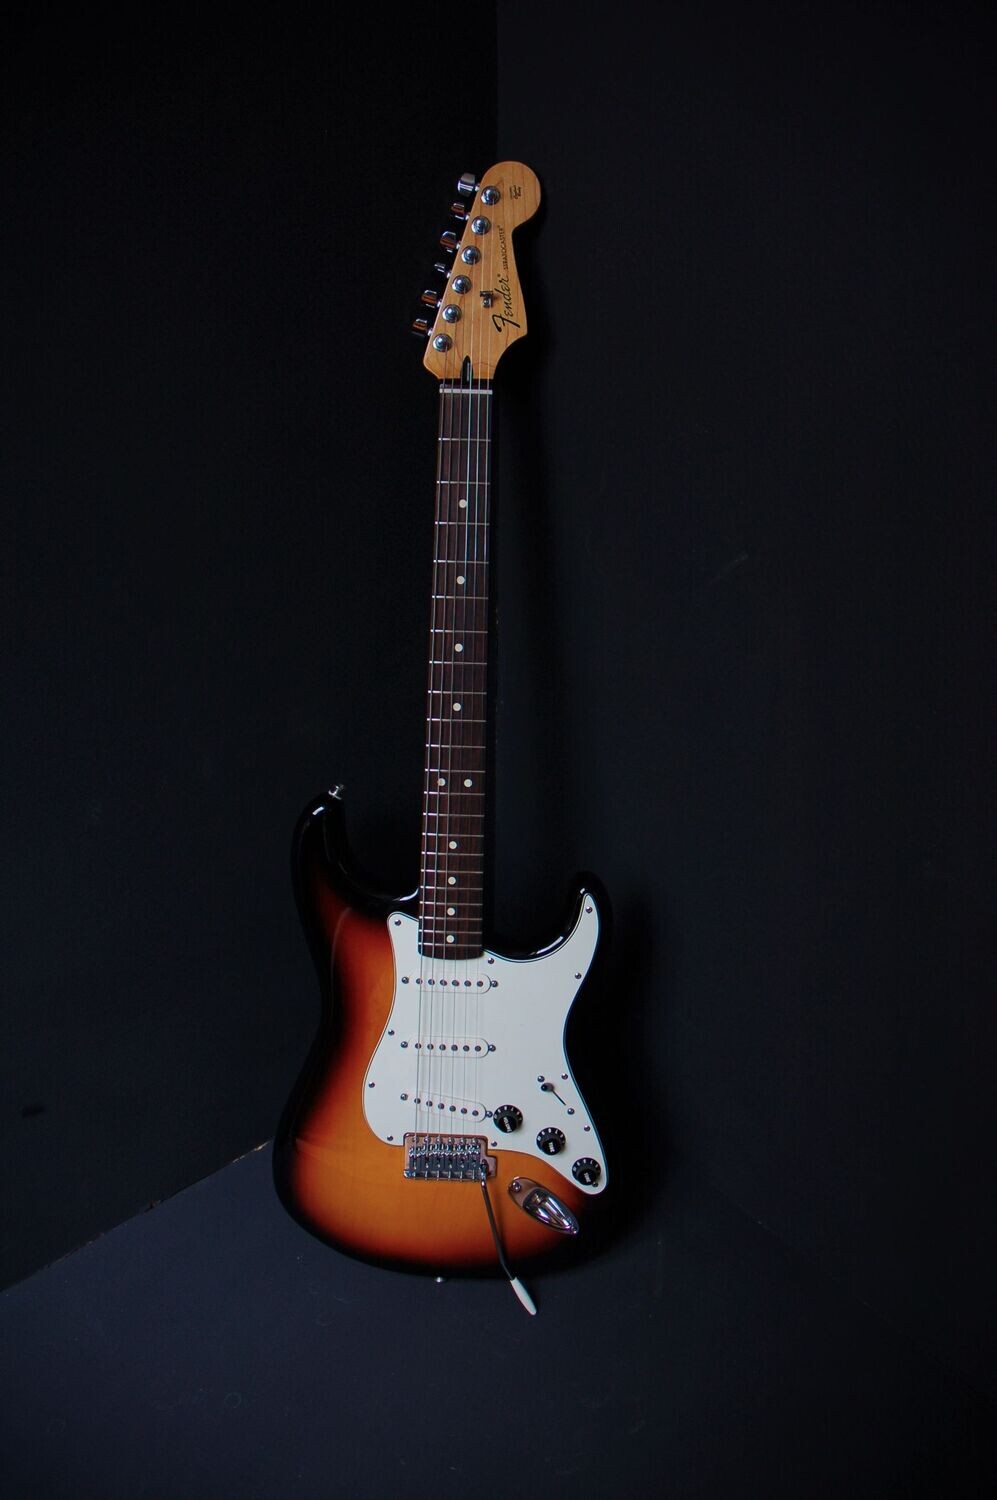 Fender Stratocaster Sunburst Mexico